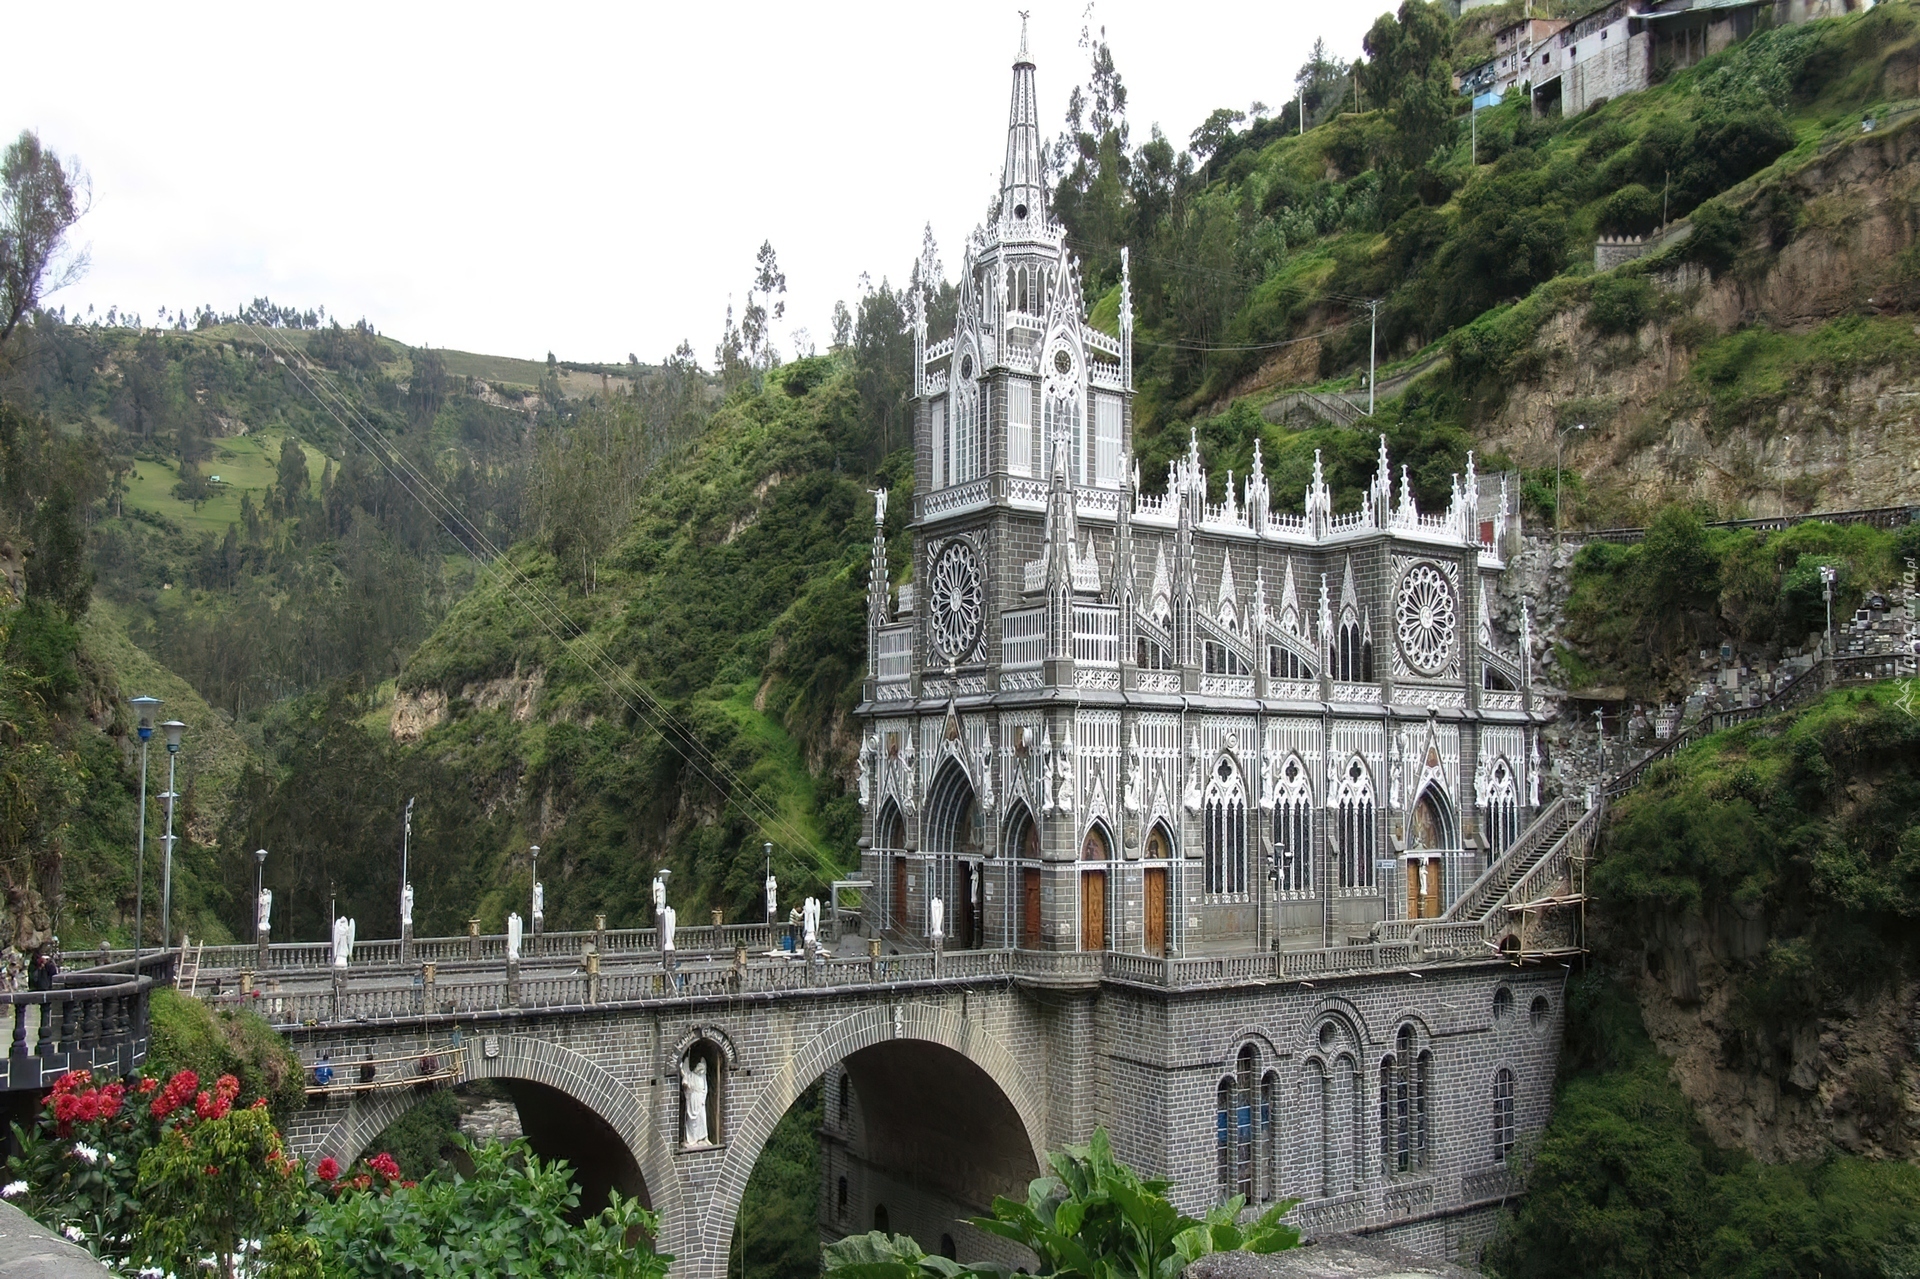 Kolumbia, Sanktuarium, Las Lajas